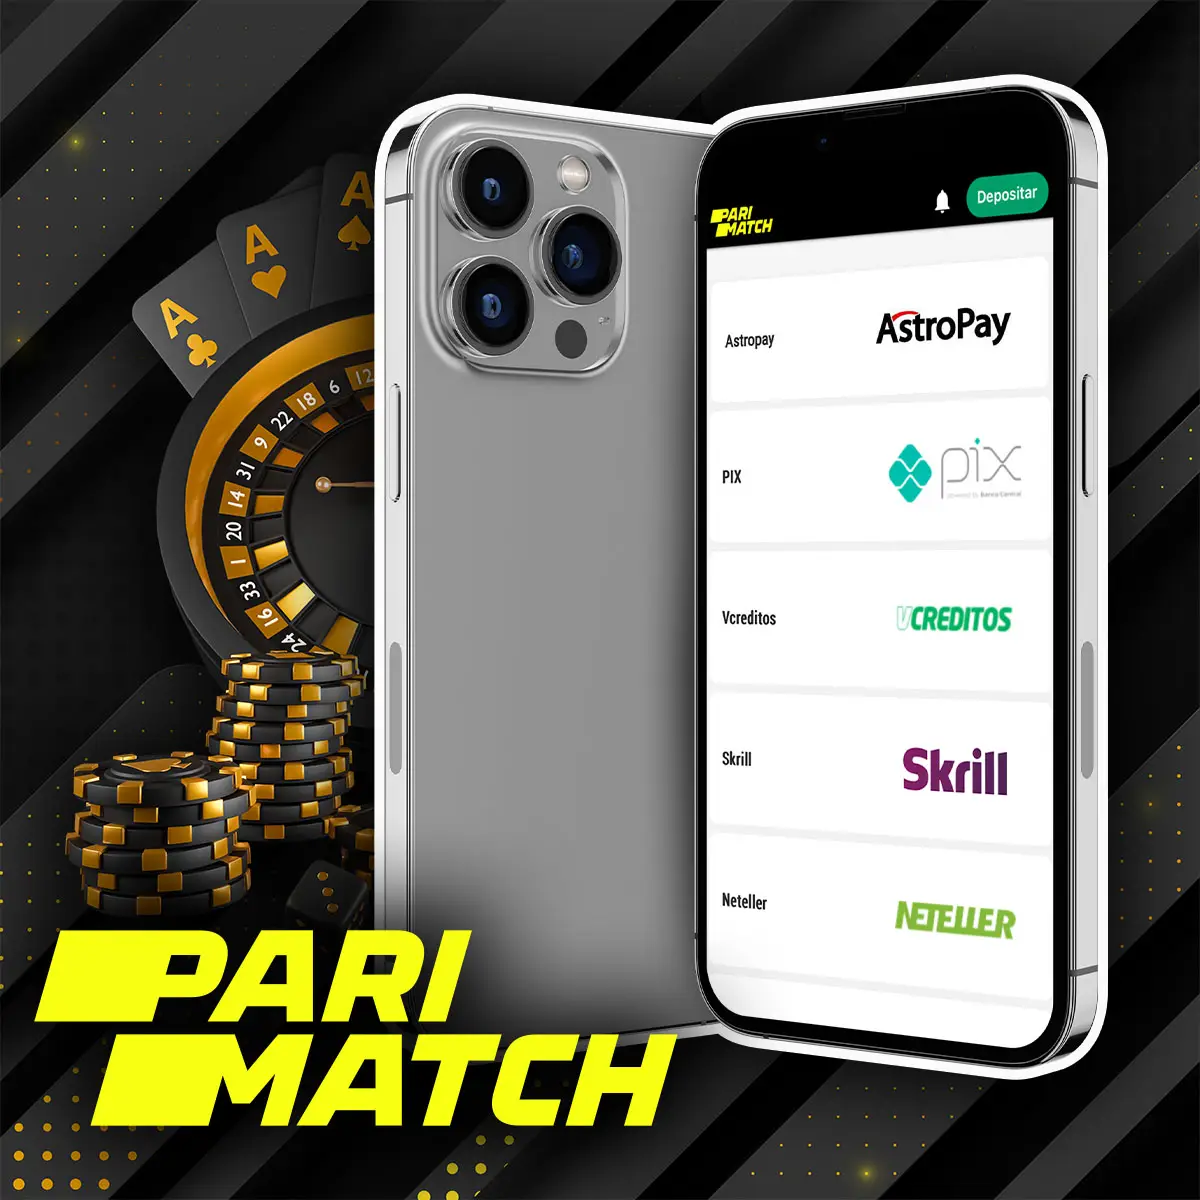 Métodos de pagamento no aplicativo Parimatch no Brasil